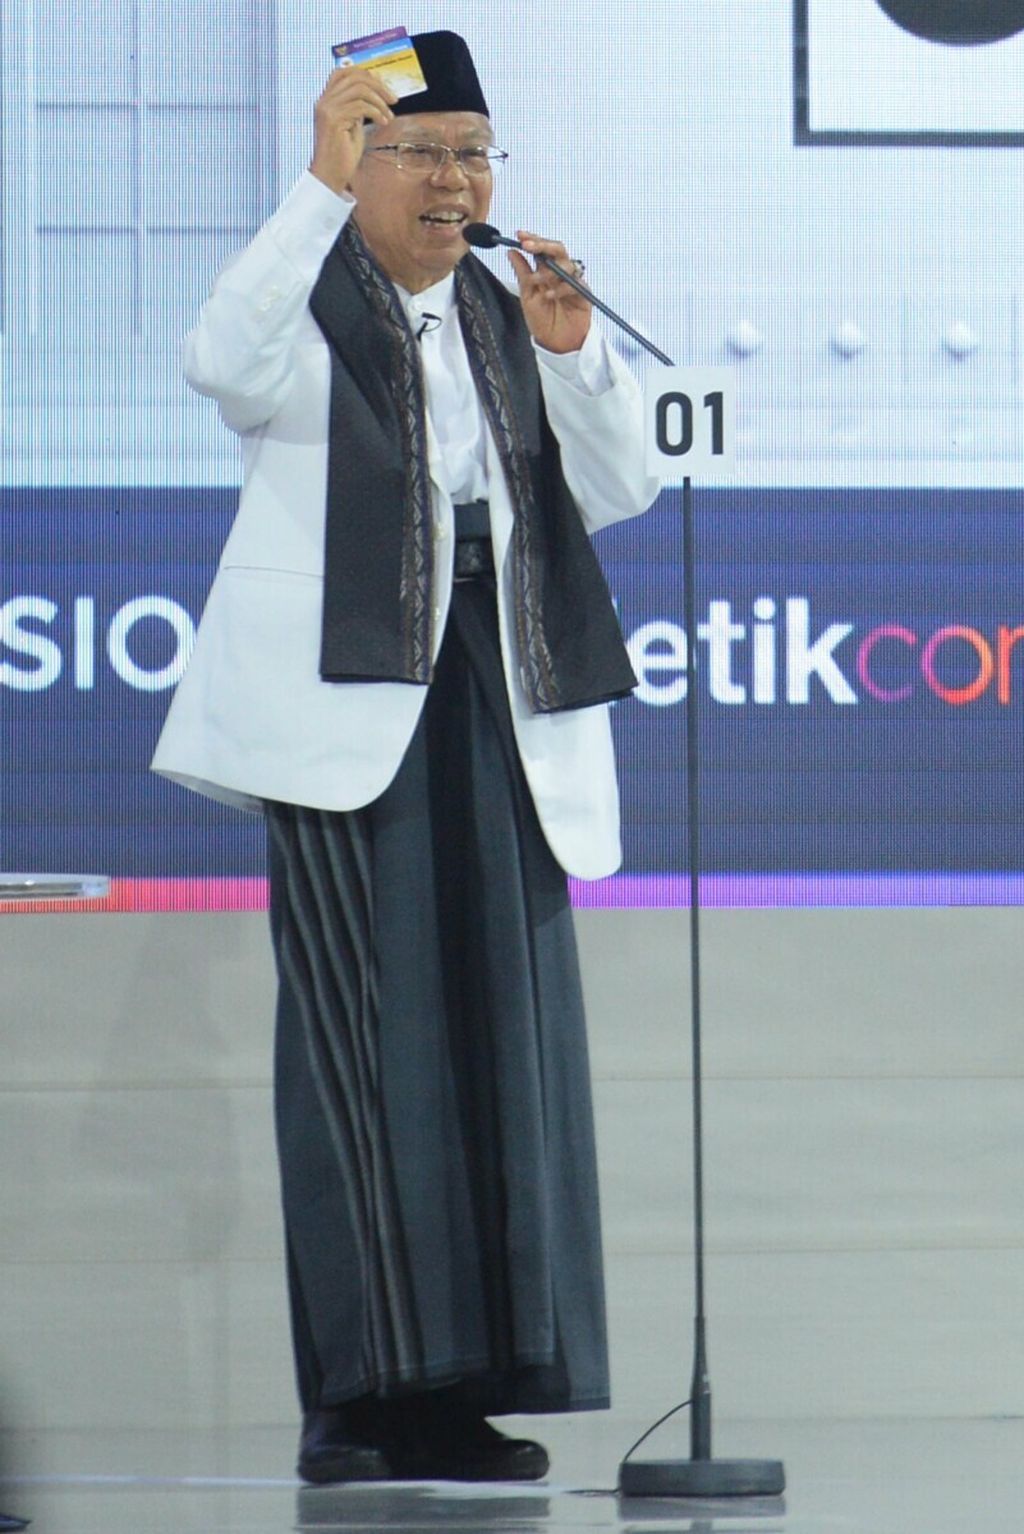 Calon wakil presiden (cawapres) nomor urut 01 Ma'ruf Amin saat tampil dalam Debat Cawapres pada Pilpres 2019 yang digelar oleh Komisi Pemilihan Umum (KPU) di Hotel Sultan, Jakarta, Minggu (17/3/2019) malam.